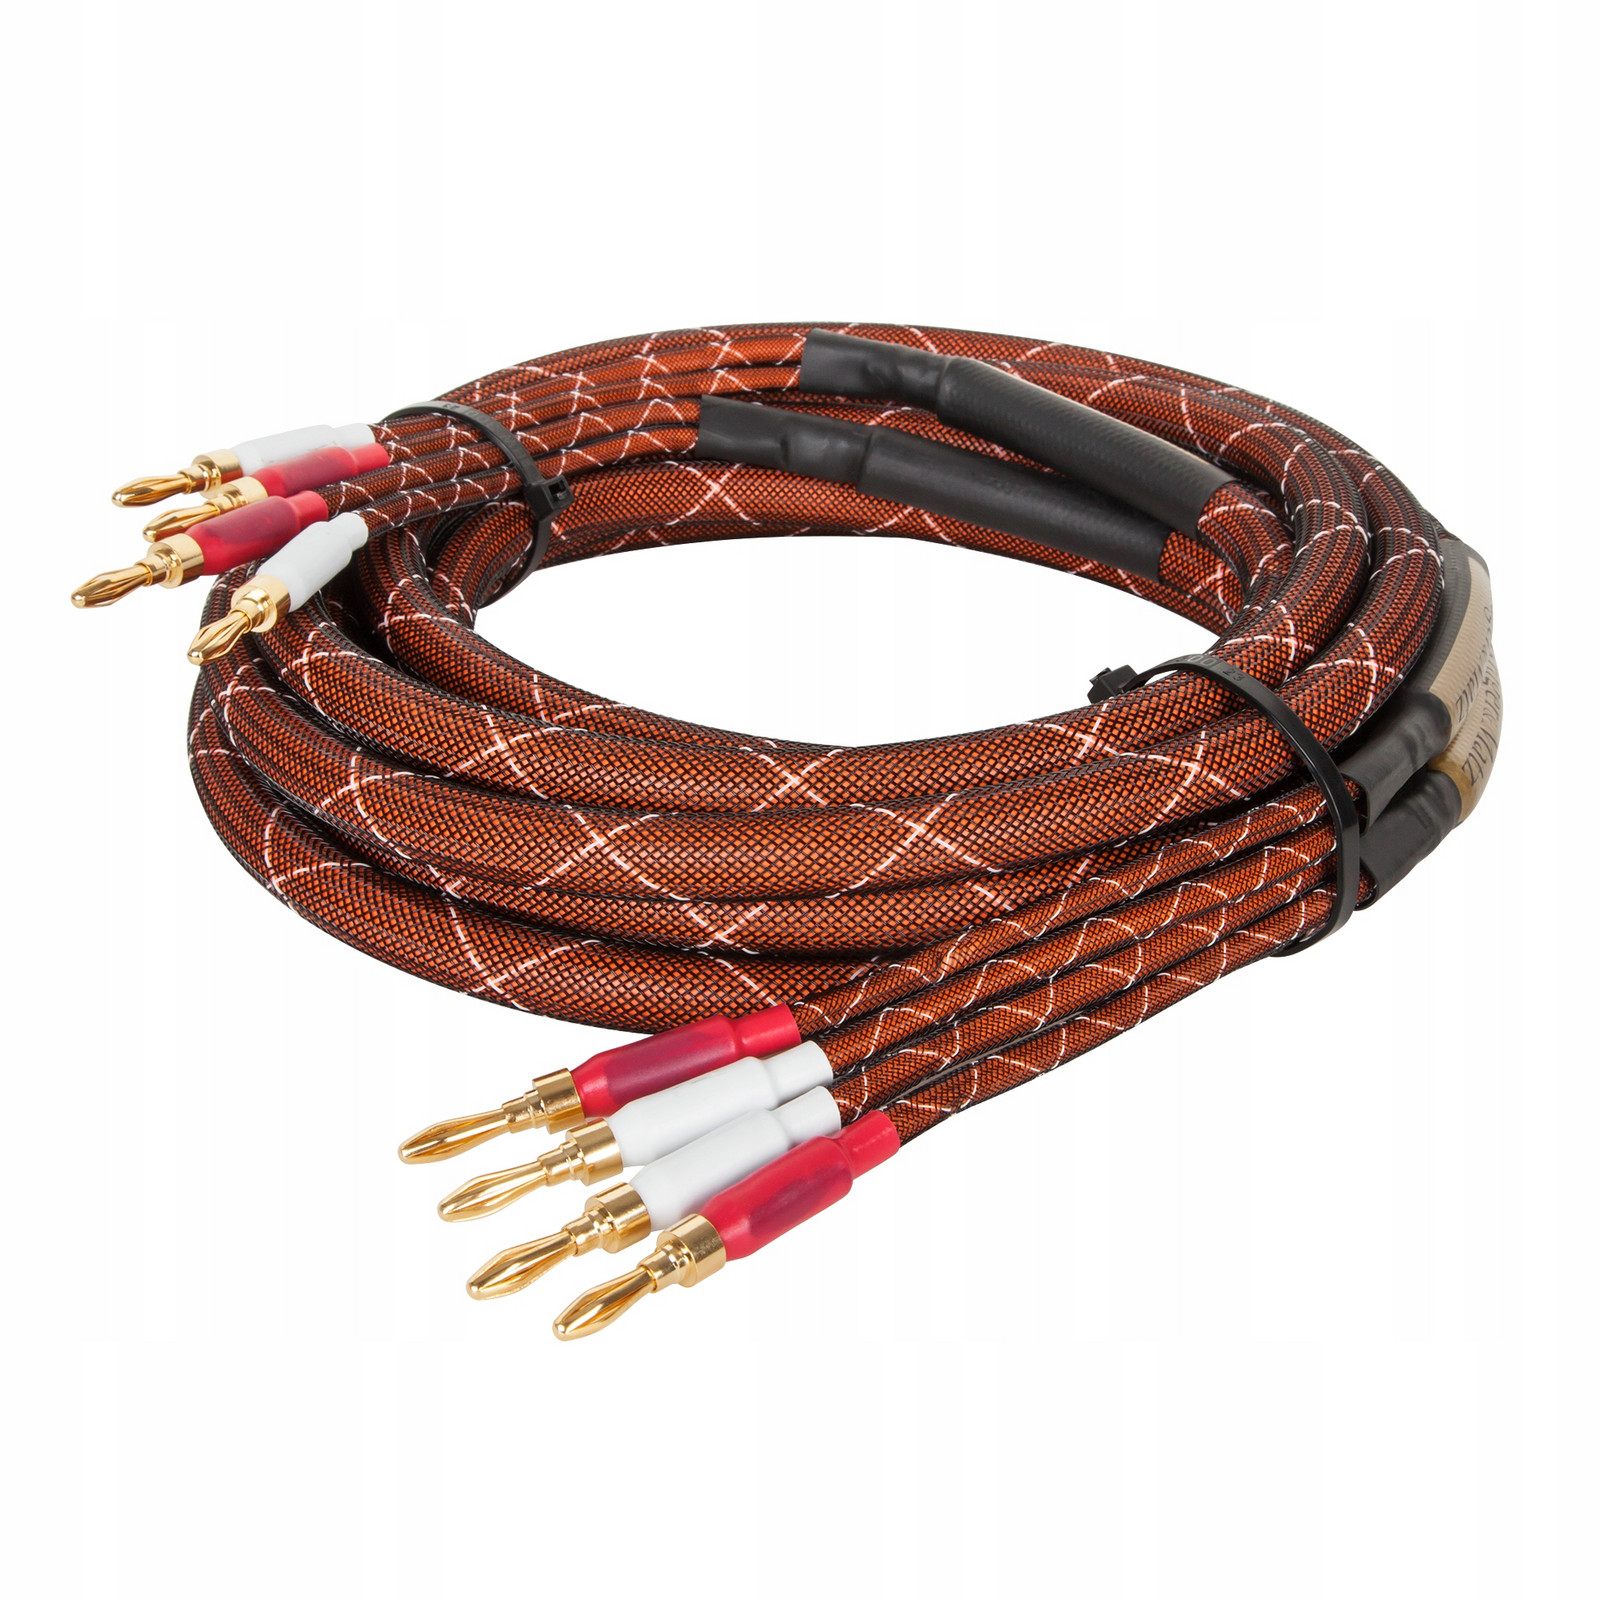 Reproduktorový kabel Kruger&matz KM0335 2 x 25